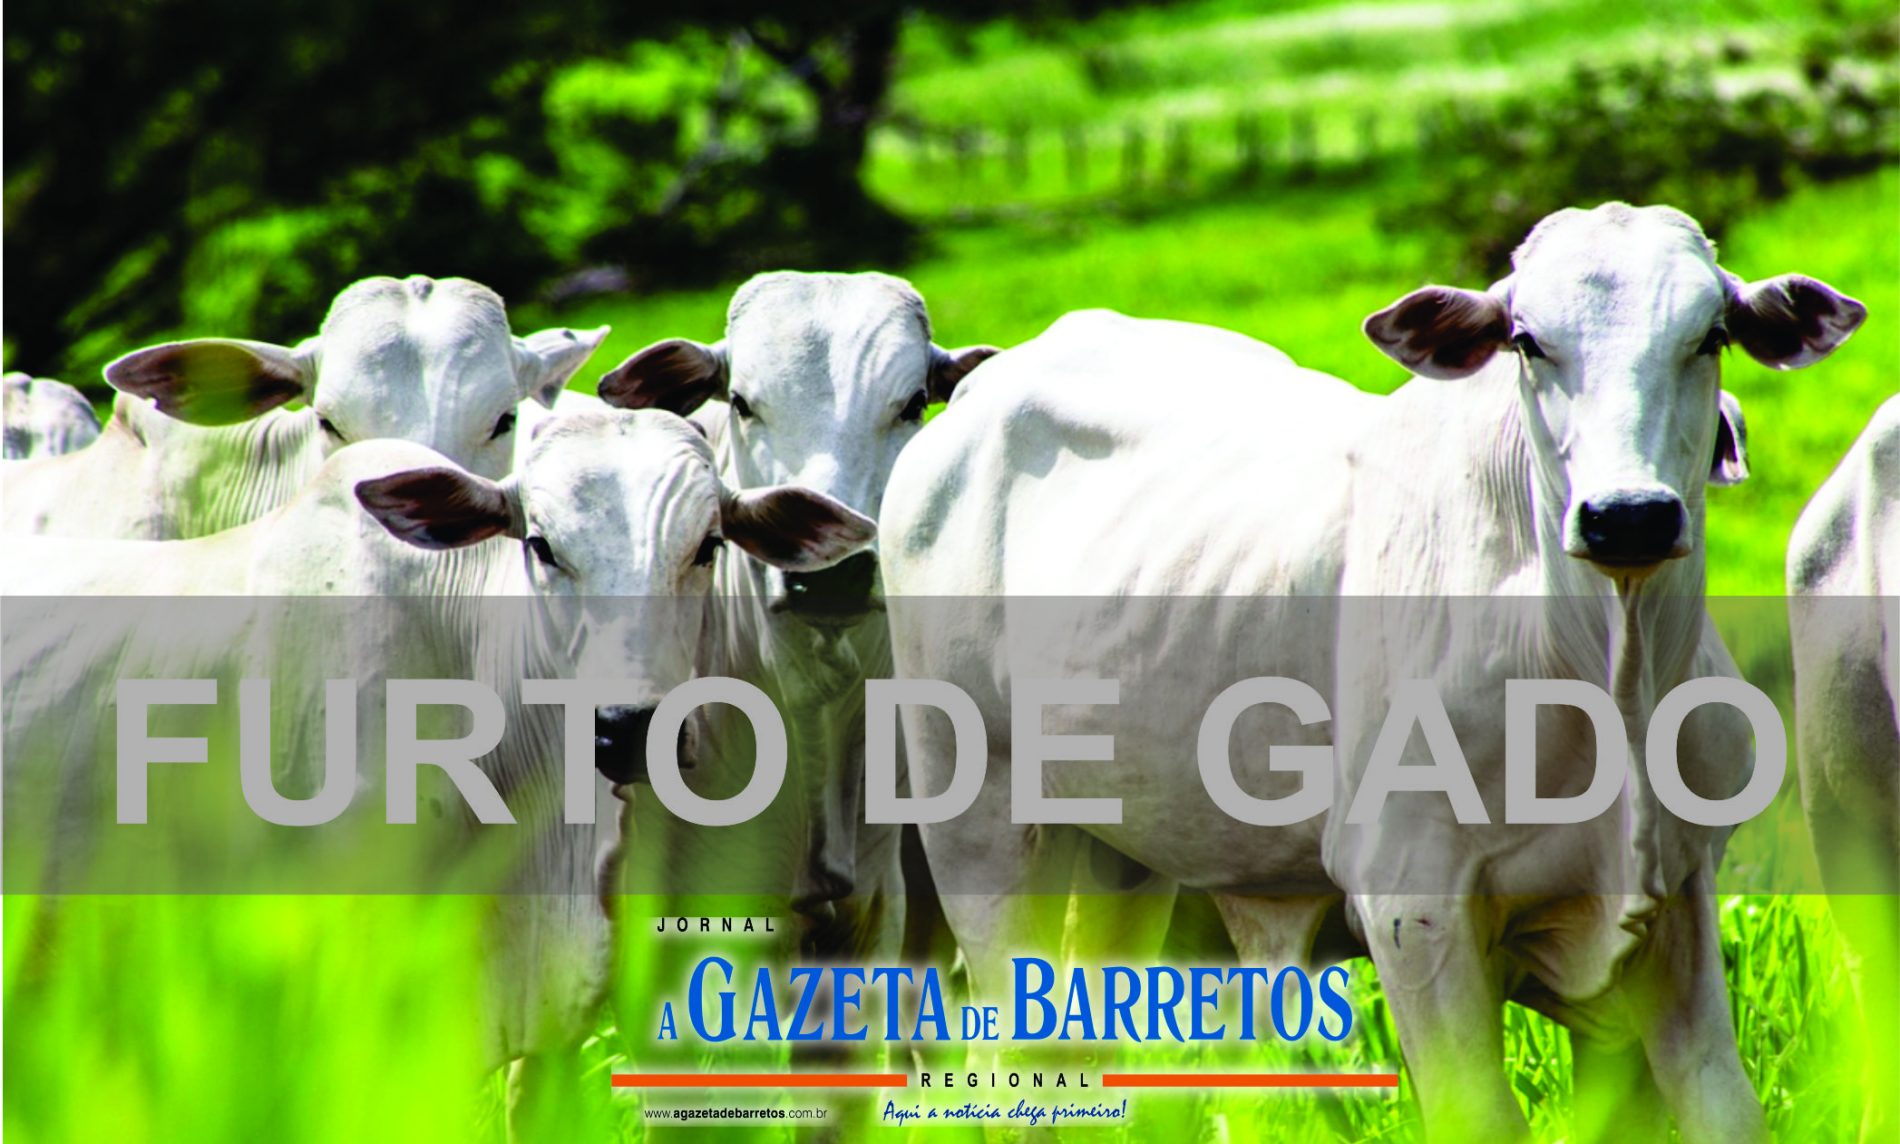 BARRETOS: Furto de gado em área do Distrito Industrial